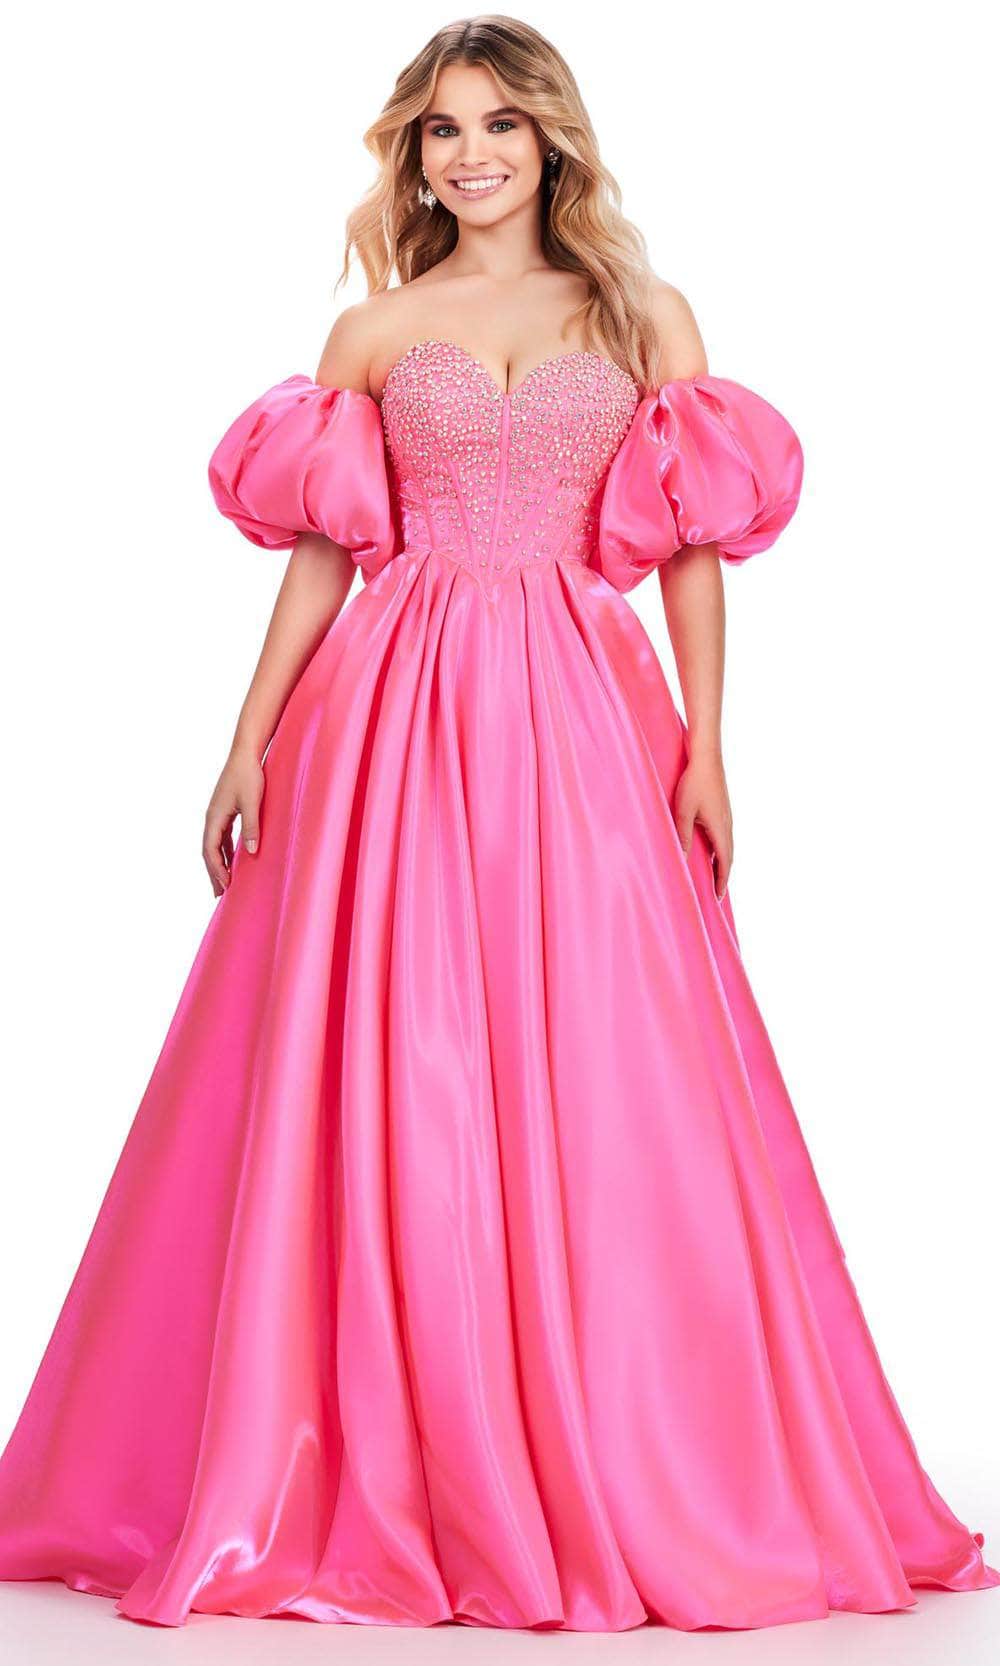 Ashley Lauren 11642 - Jeweled Satin Prom Dress
